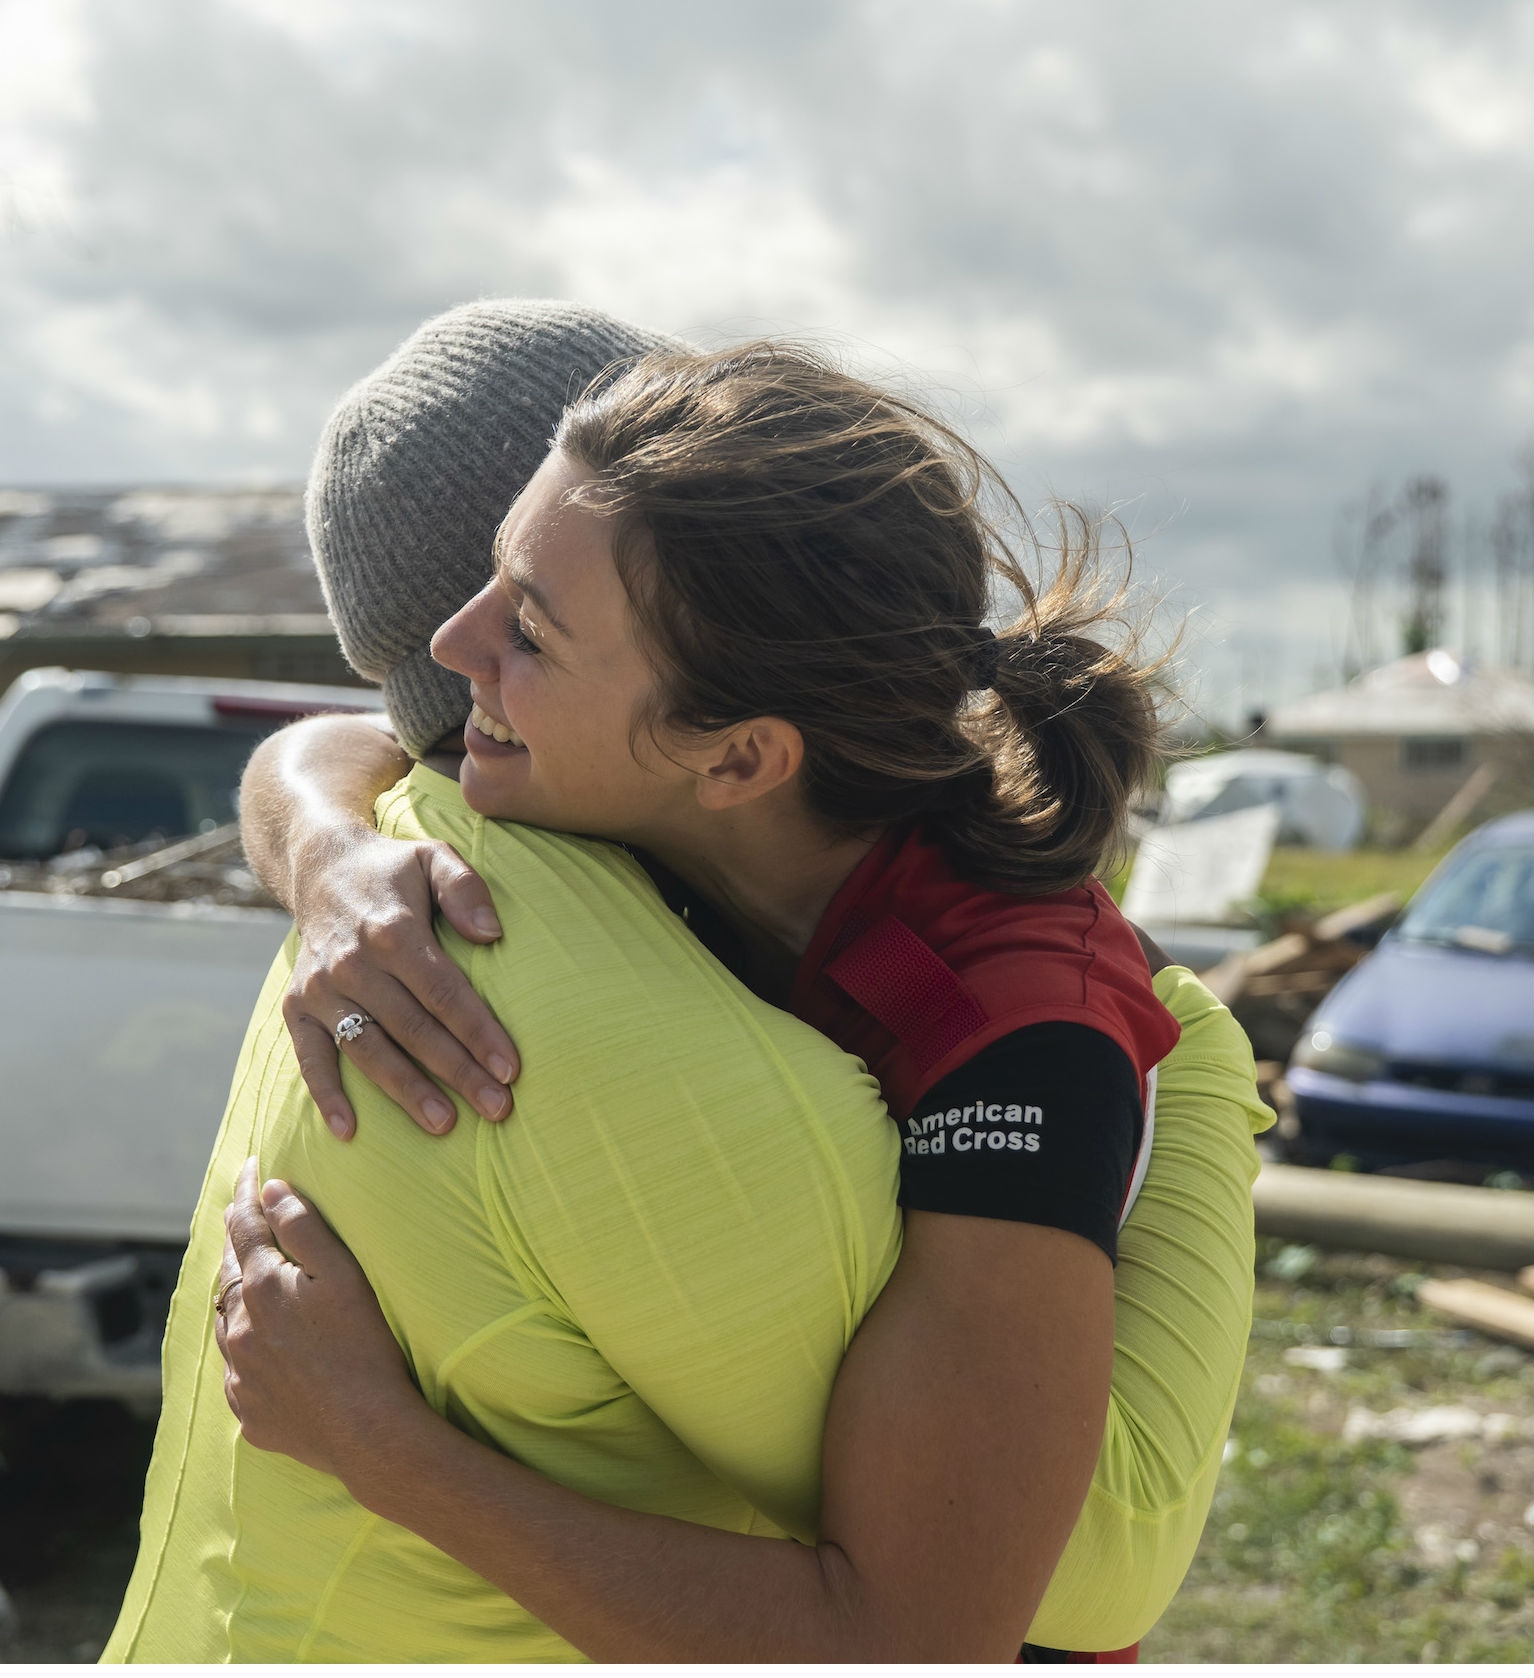 Red Cross volunteer hugging another person